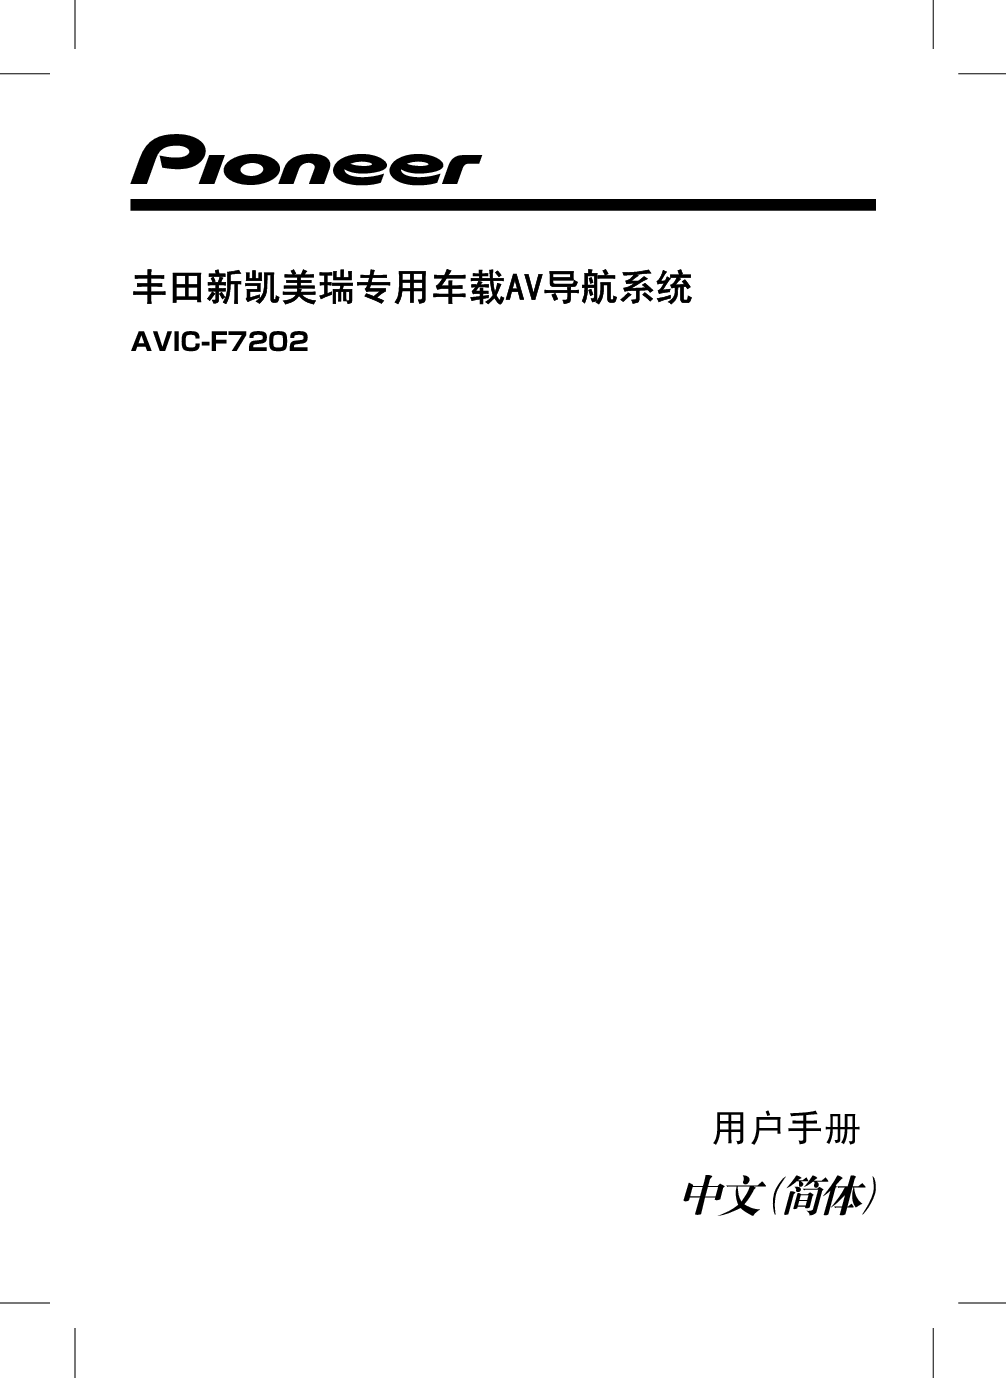 先锋 Pioneer AVIC-F7202 操作手册 封面